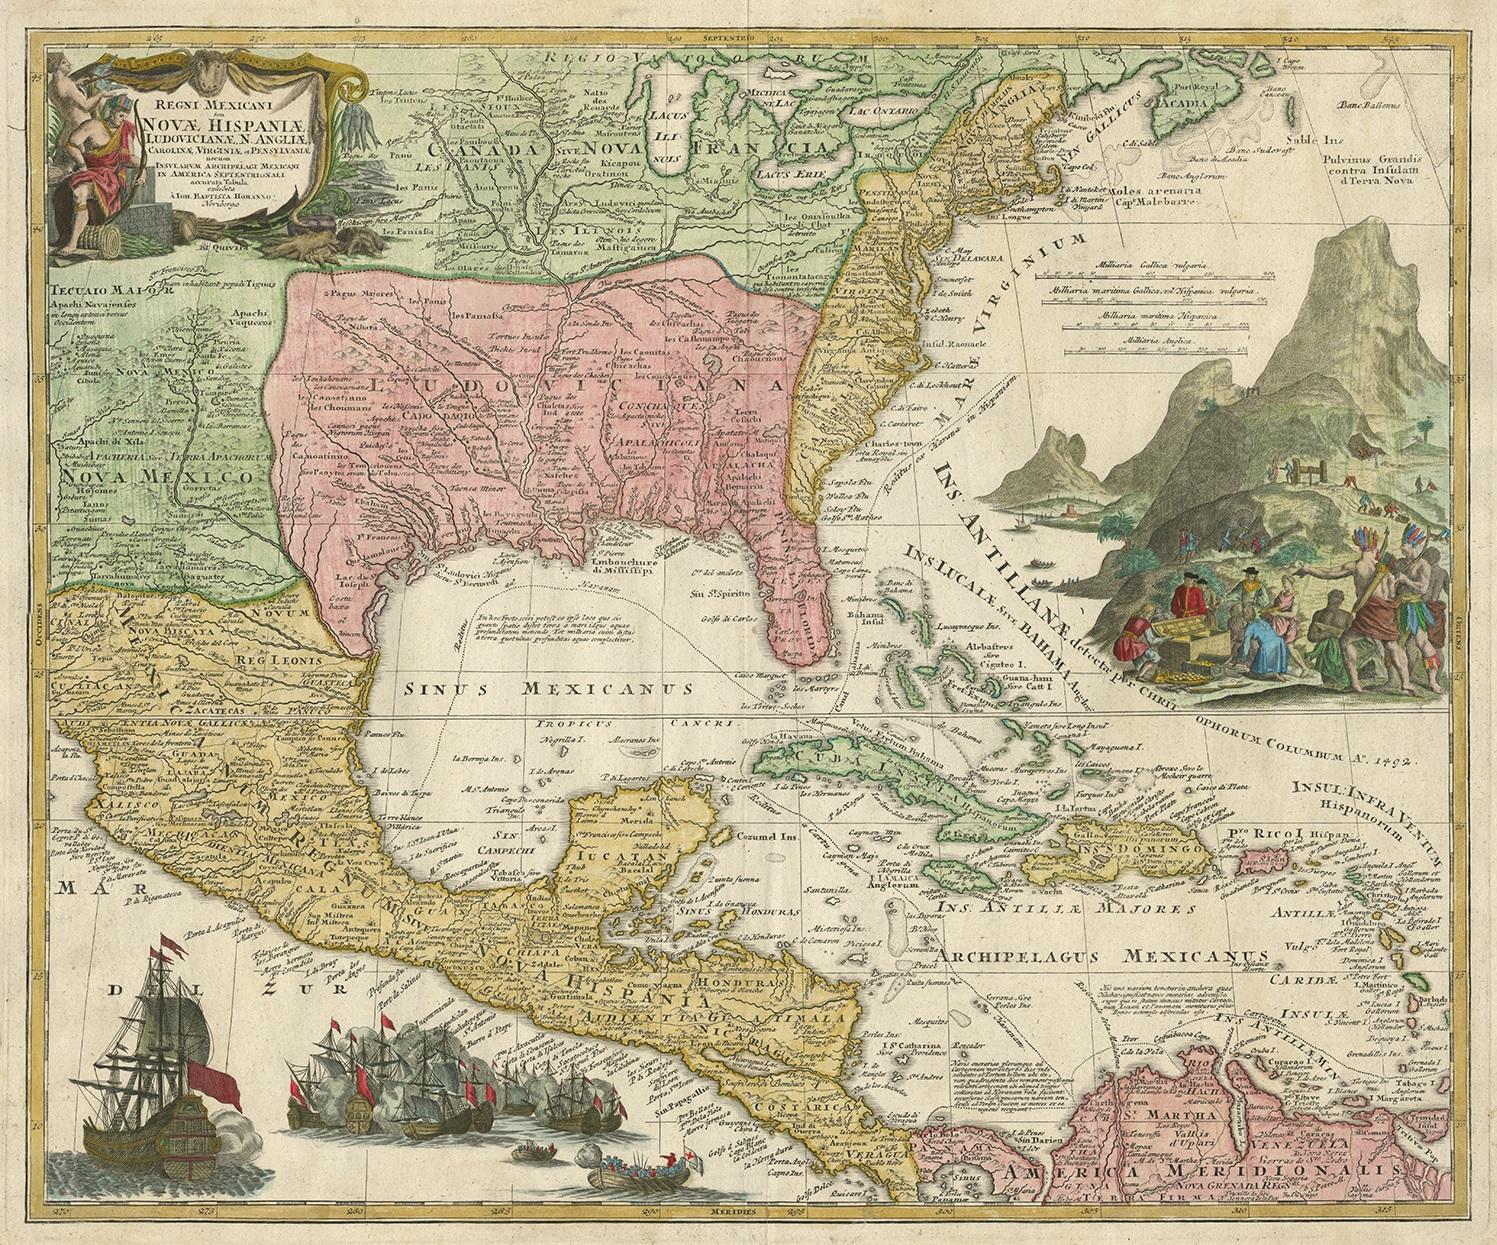 Antique map titled 'Regni Mexicani seu Nova Hispaniae Ludovicianus, N. Angliae, Carolinae, Virginiae et Pensylvaniae (..)'. This superb map covers the region from the Great Lakes and Nova Scotia through Central America, the Caribbean and Venezuela,